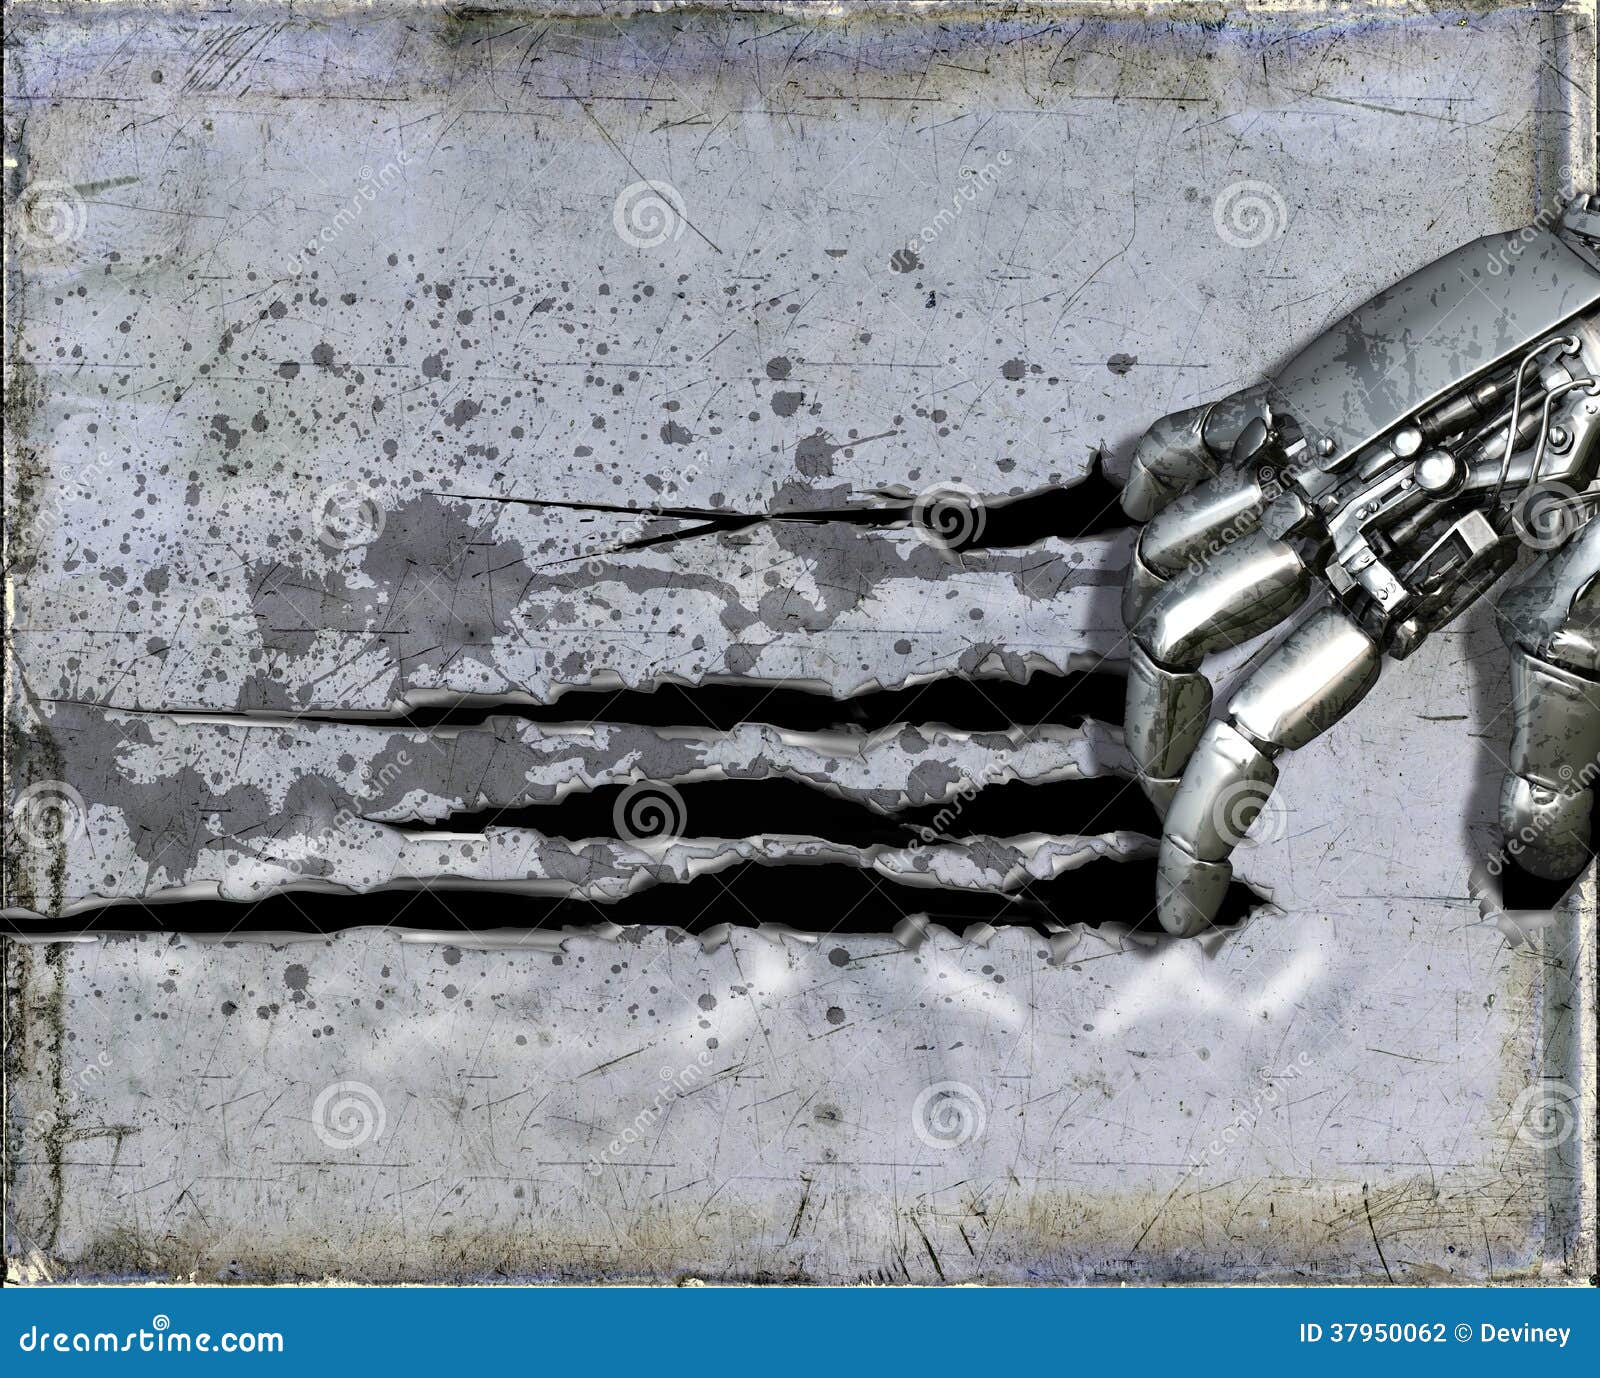 metal cyborg robot hand ripping wall